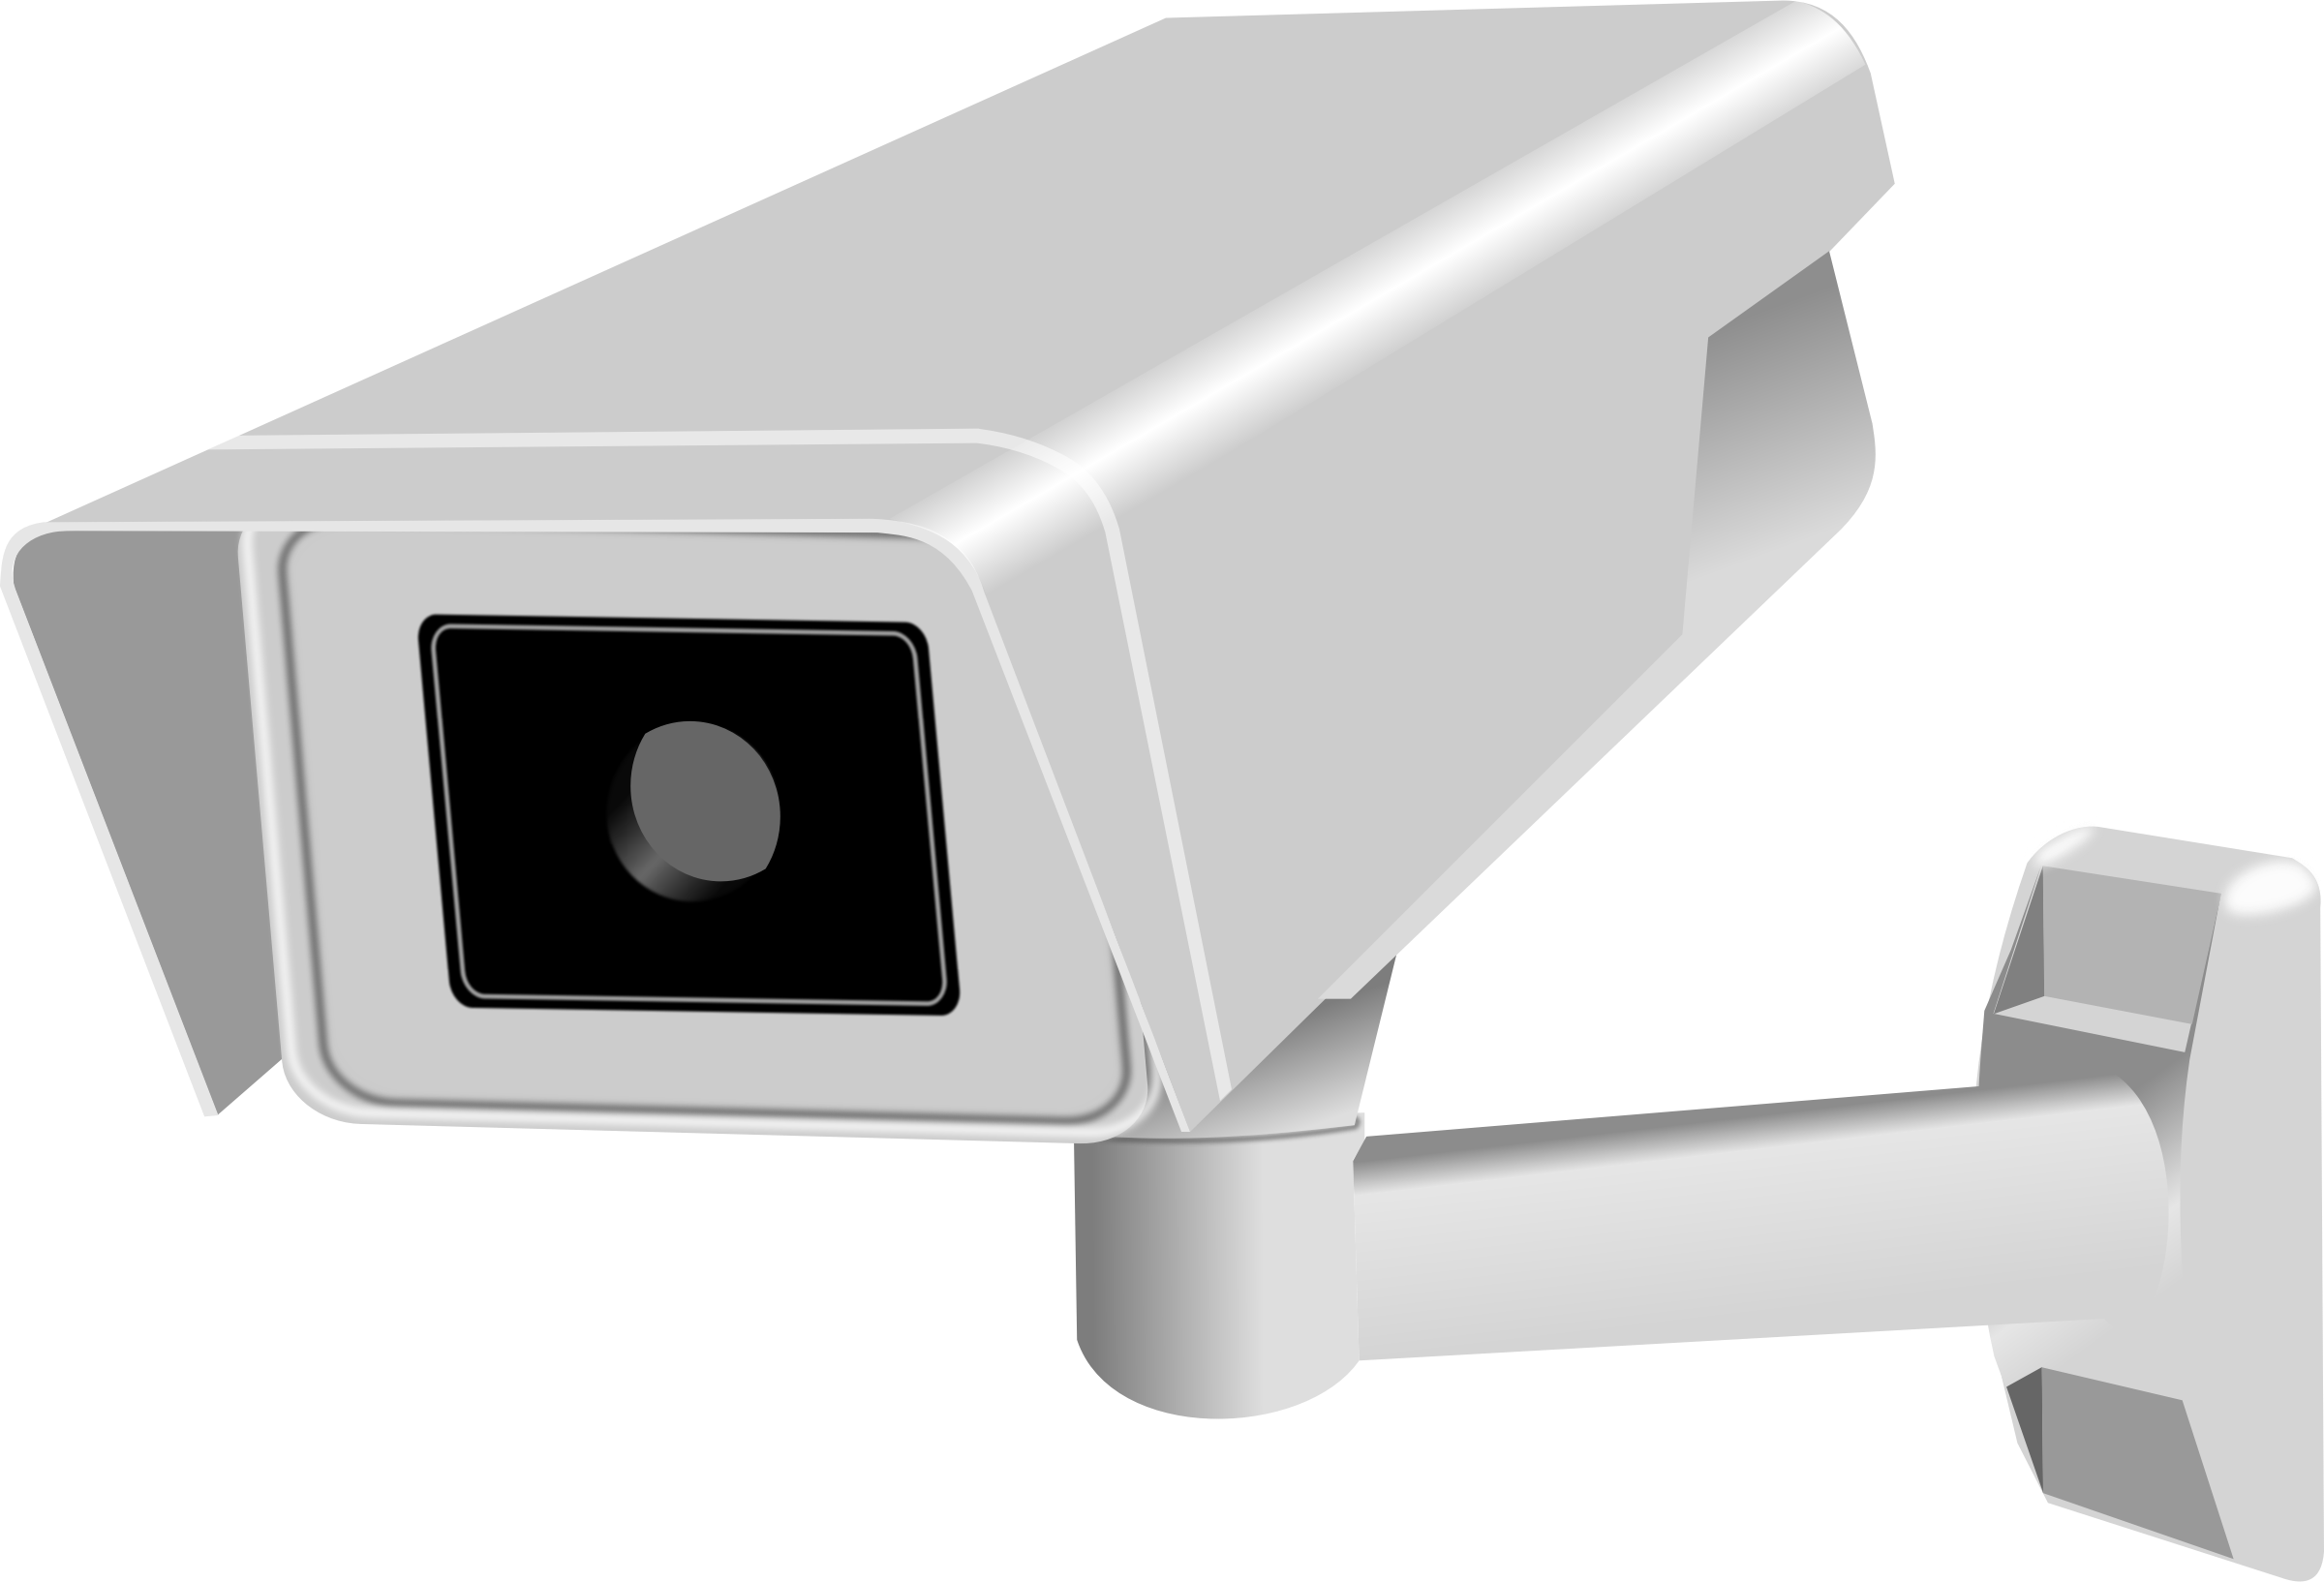 HD Security Camera Vector Art Image